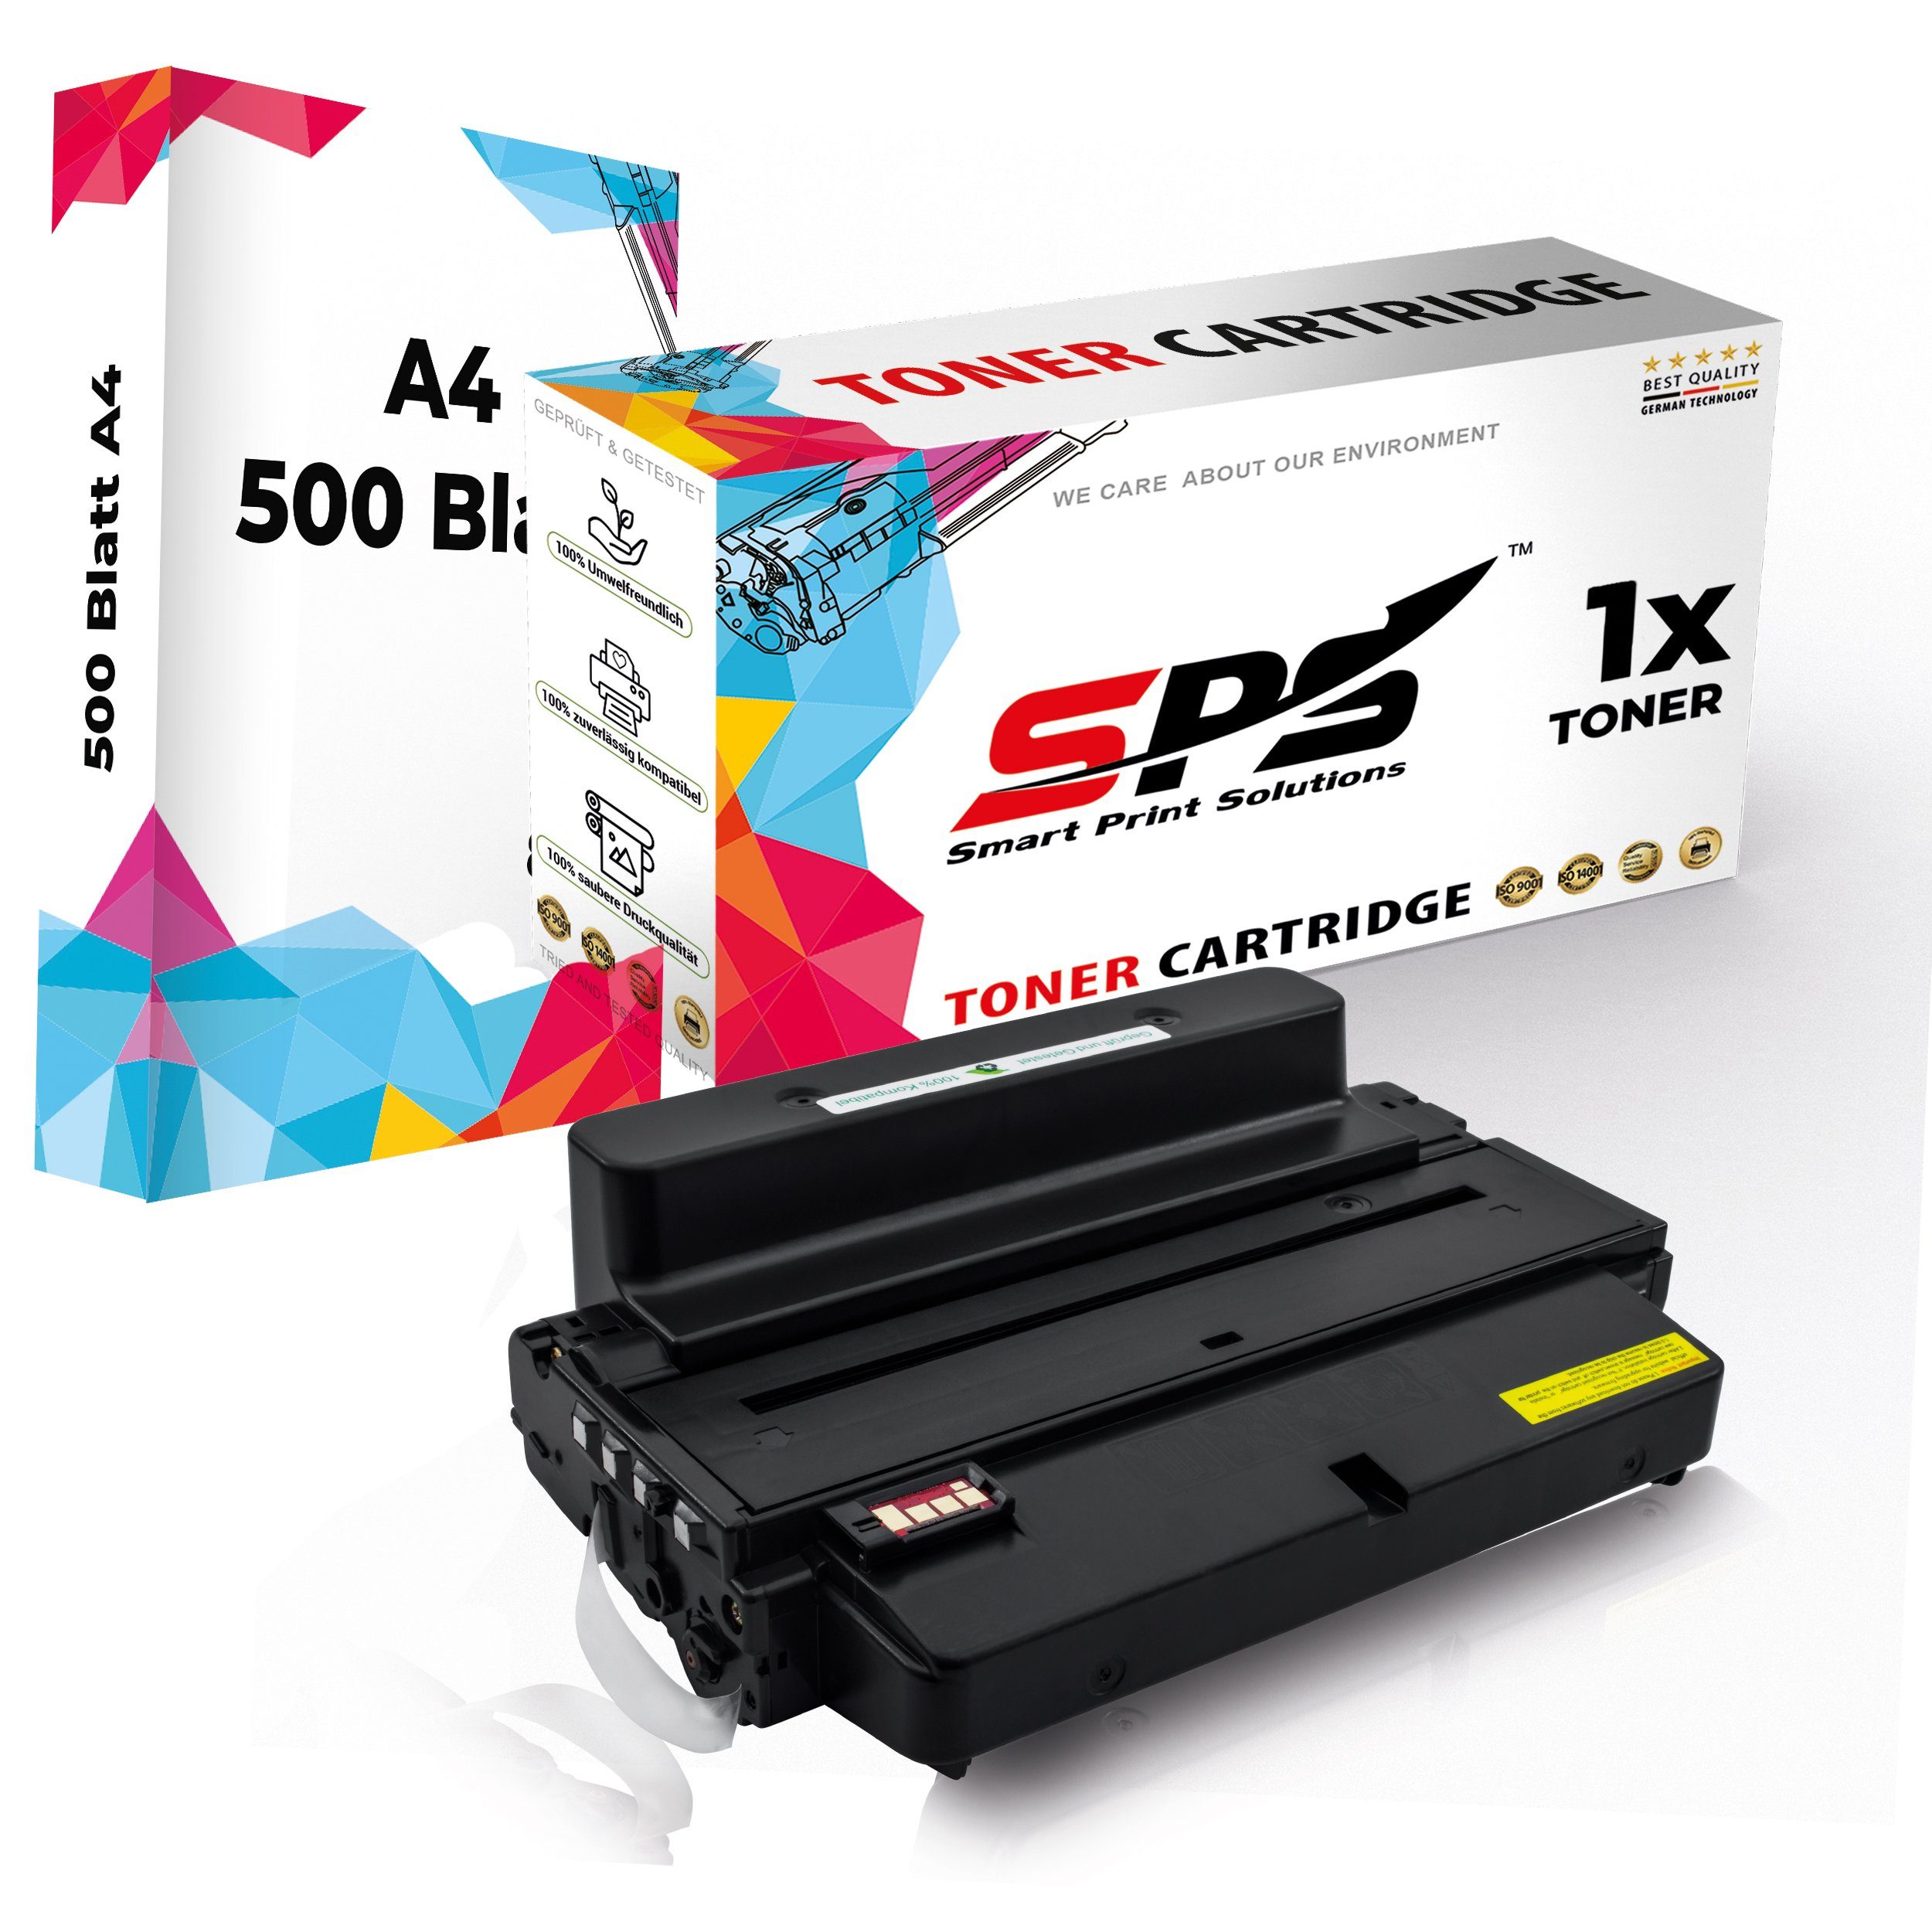 1x Samsung SPS Tonerkartusche 205L für SCX-4933 Kompatibel MLT-D205L, + (1er A4 Pack Toner) Schwarz Papier,